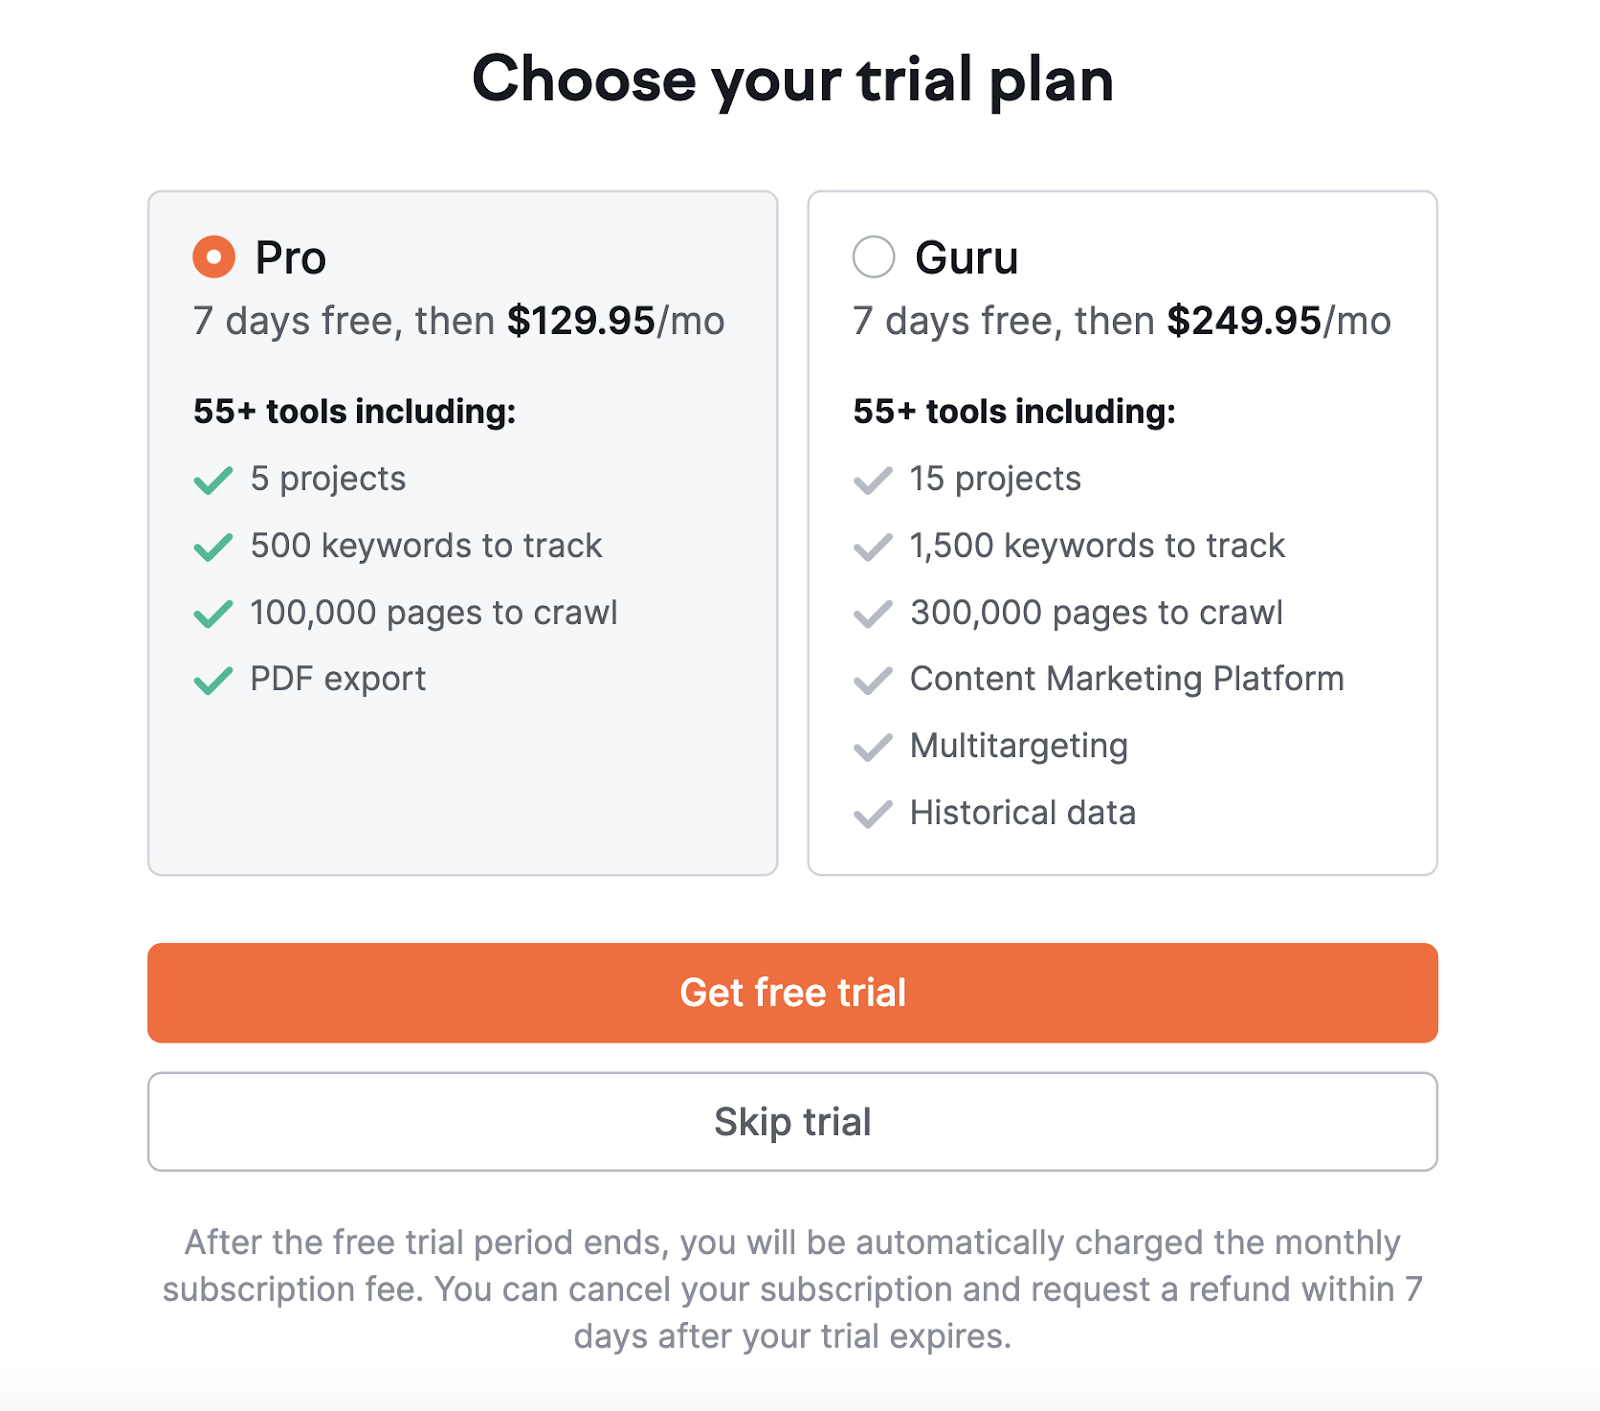 Semrush's "Choose your trial plan" opt-in